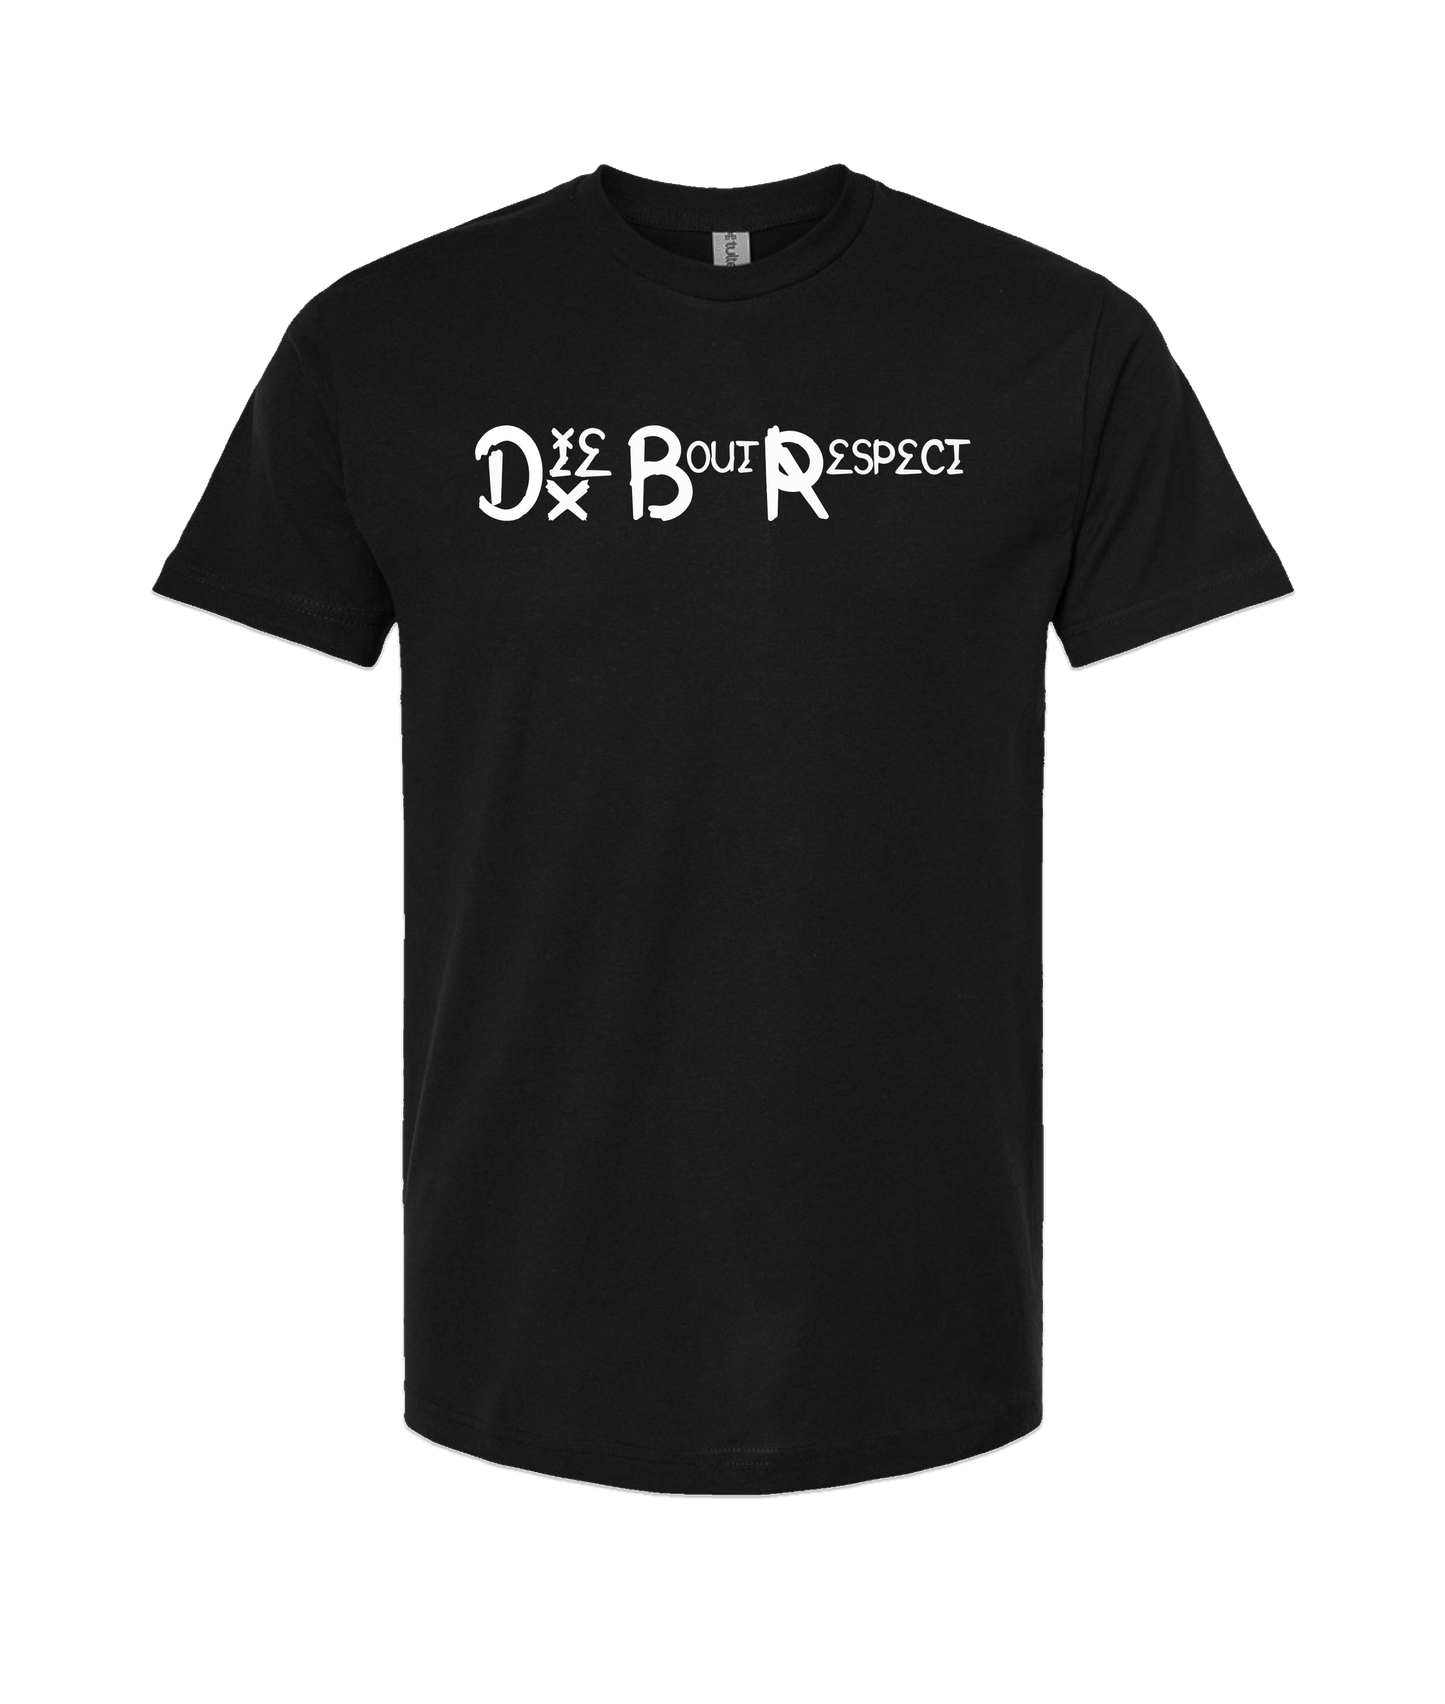 DBR - Die Bout Respect - Black T-Shirt